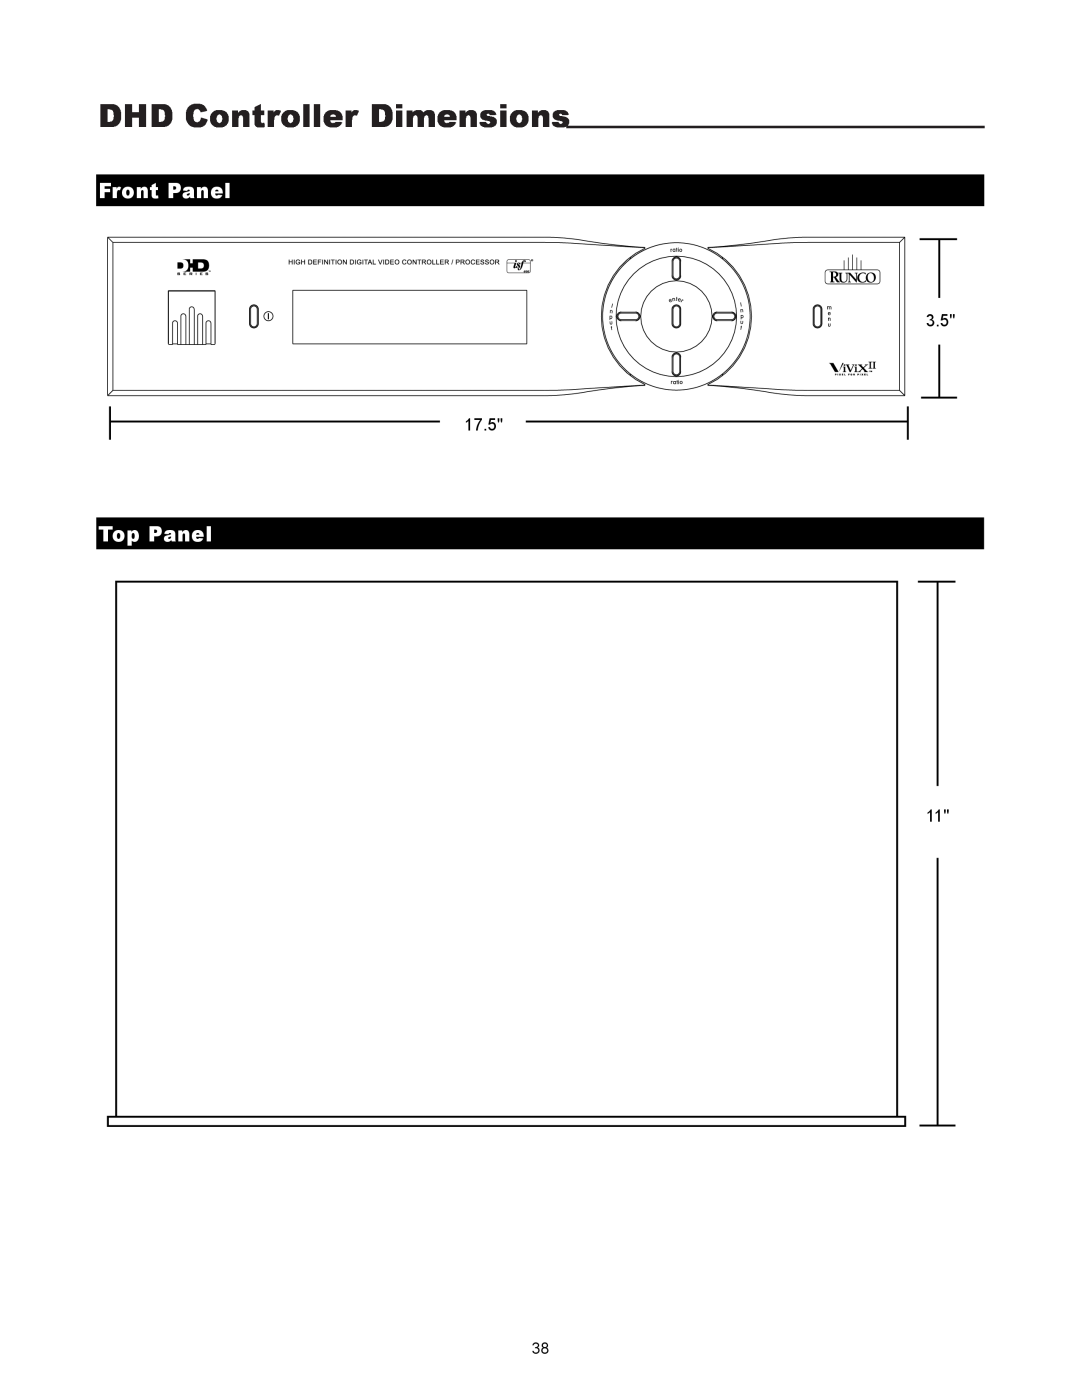 Runco VX-4000ci manual DHD Controller Dimensions, Top Panel, Front Panel 